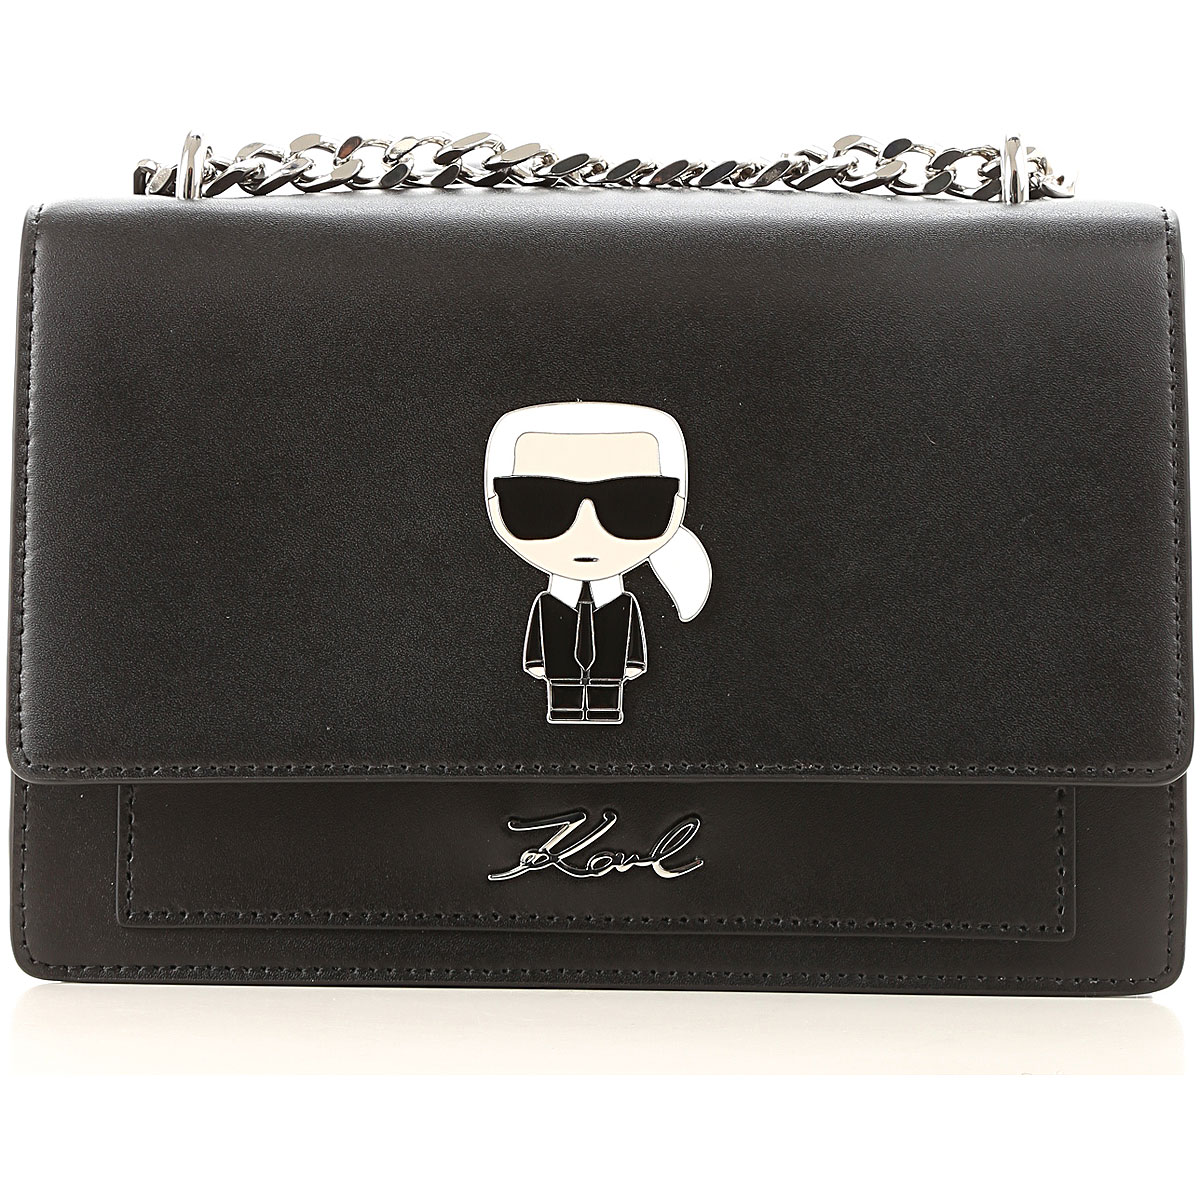 Handbags Karl Lagerfeld, Style code: 201w3094-nero-